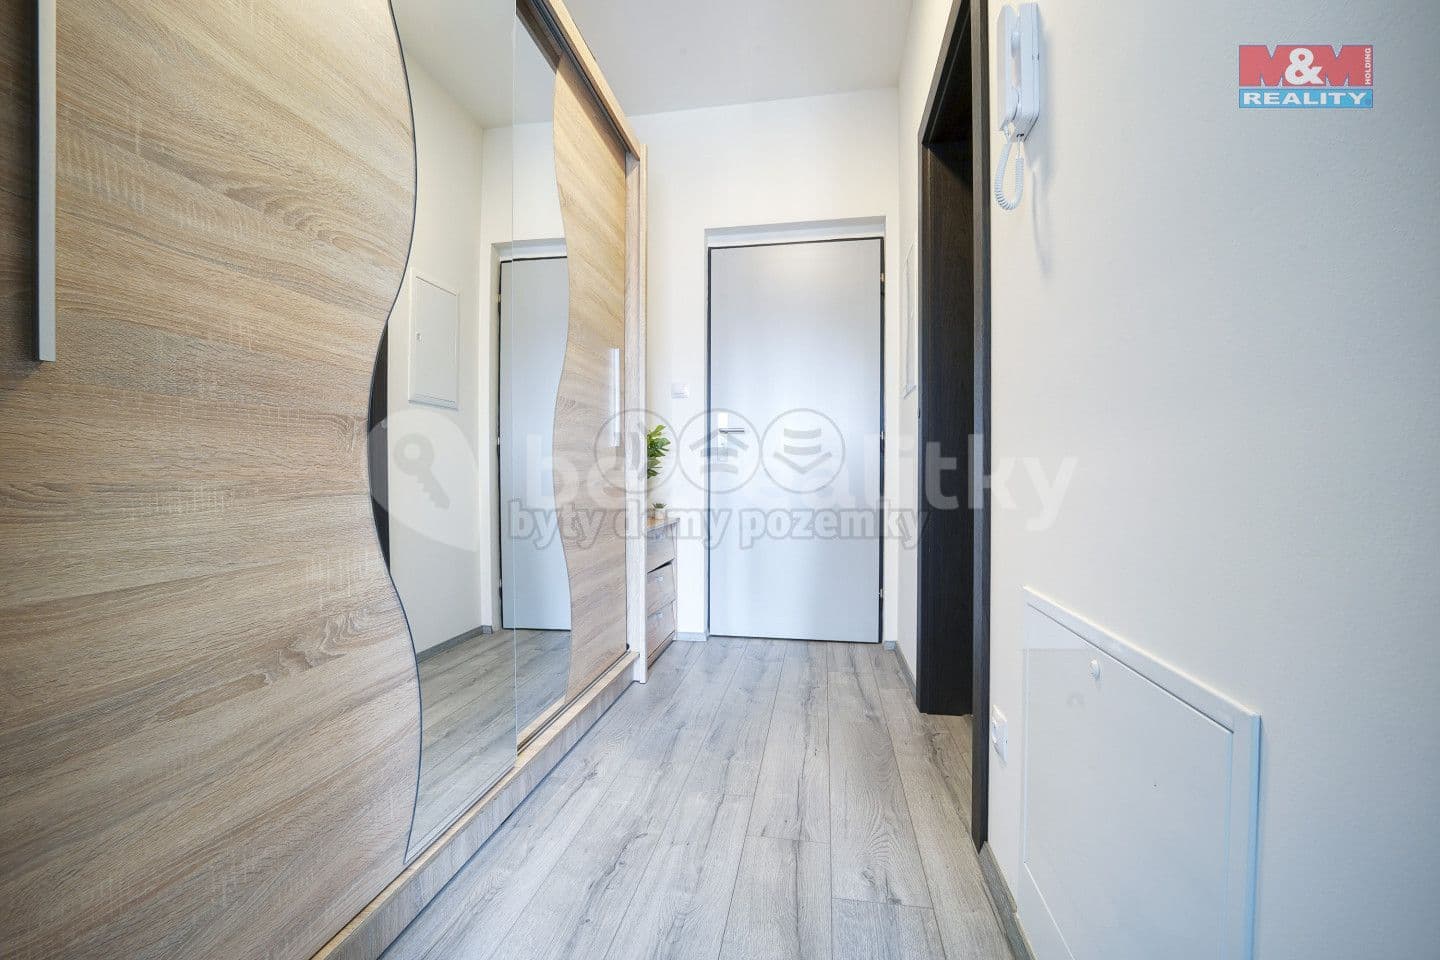 Predaj bytu 1-izbový 27 m², Vinařská, Beroun, Středočeský kraj